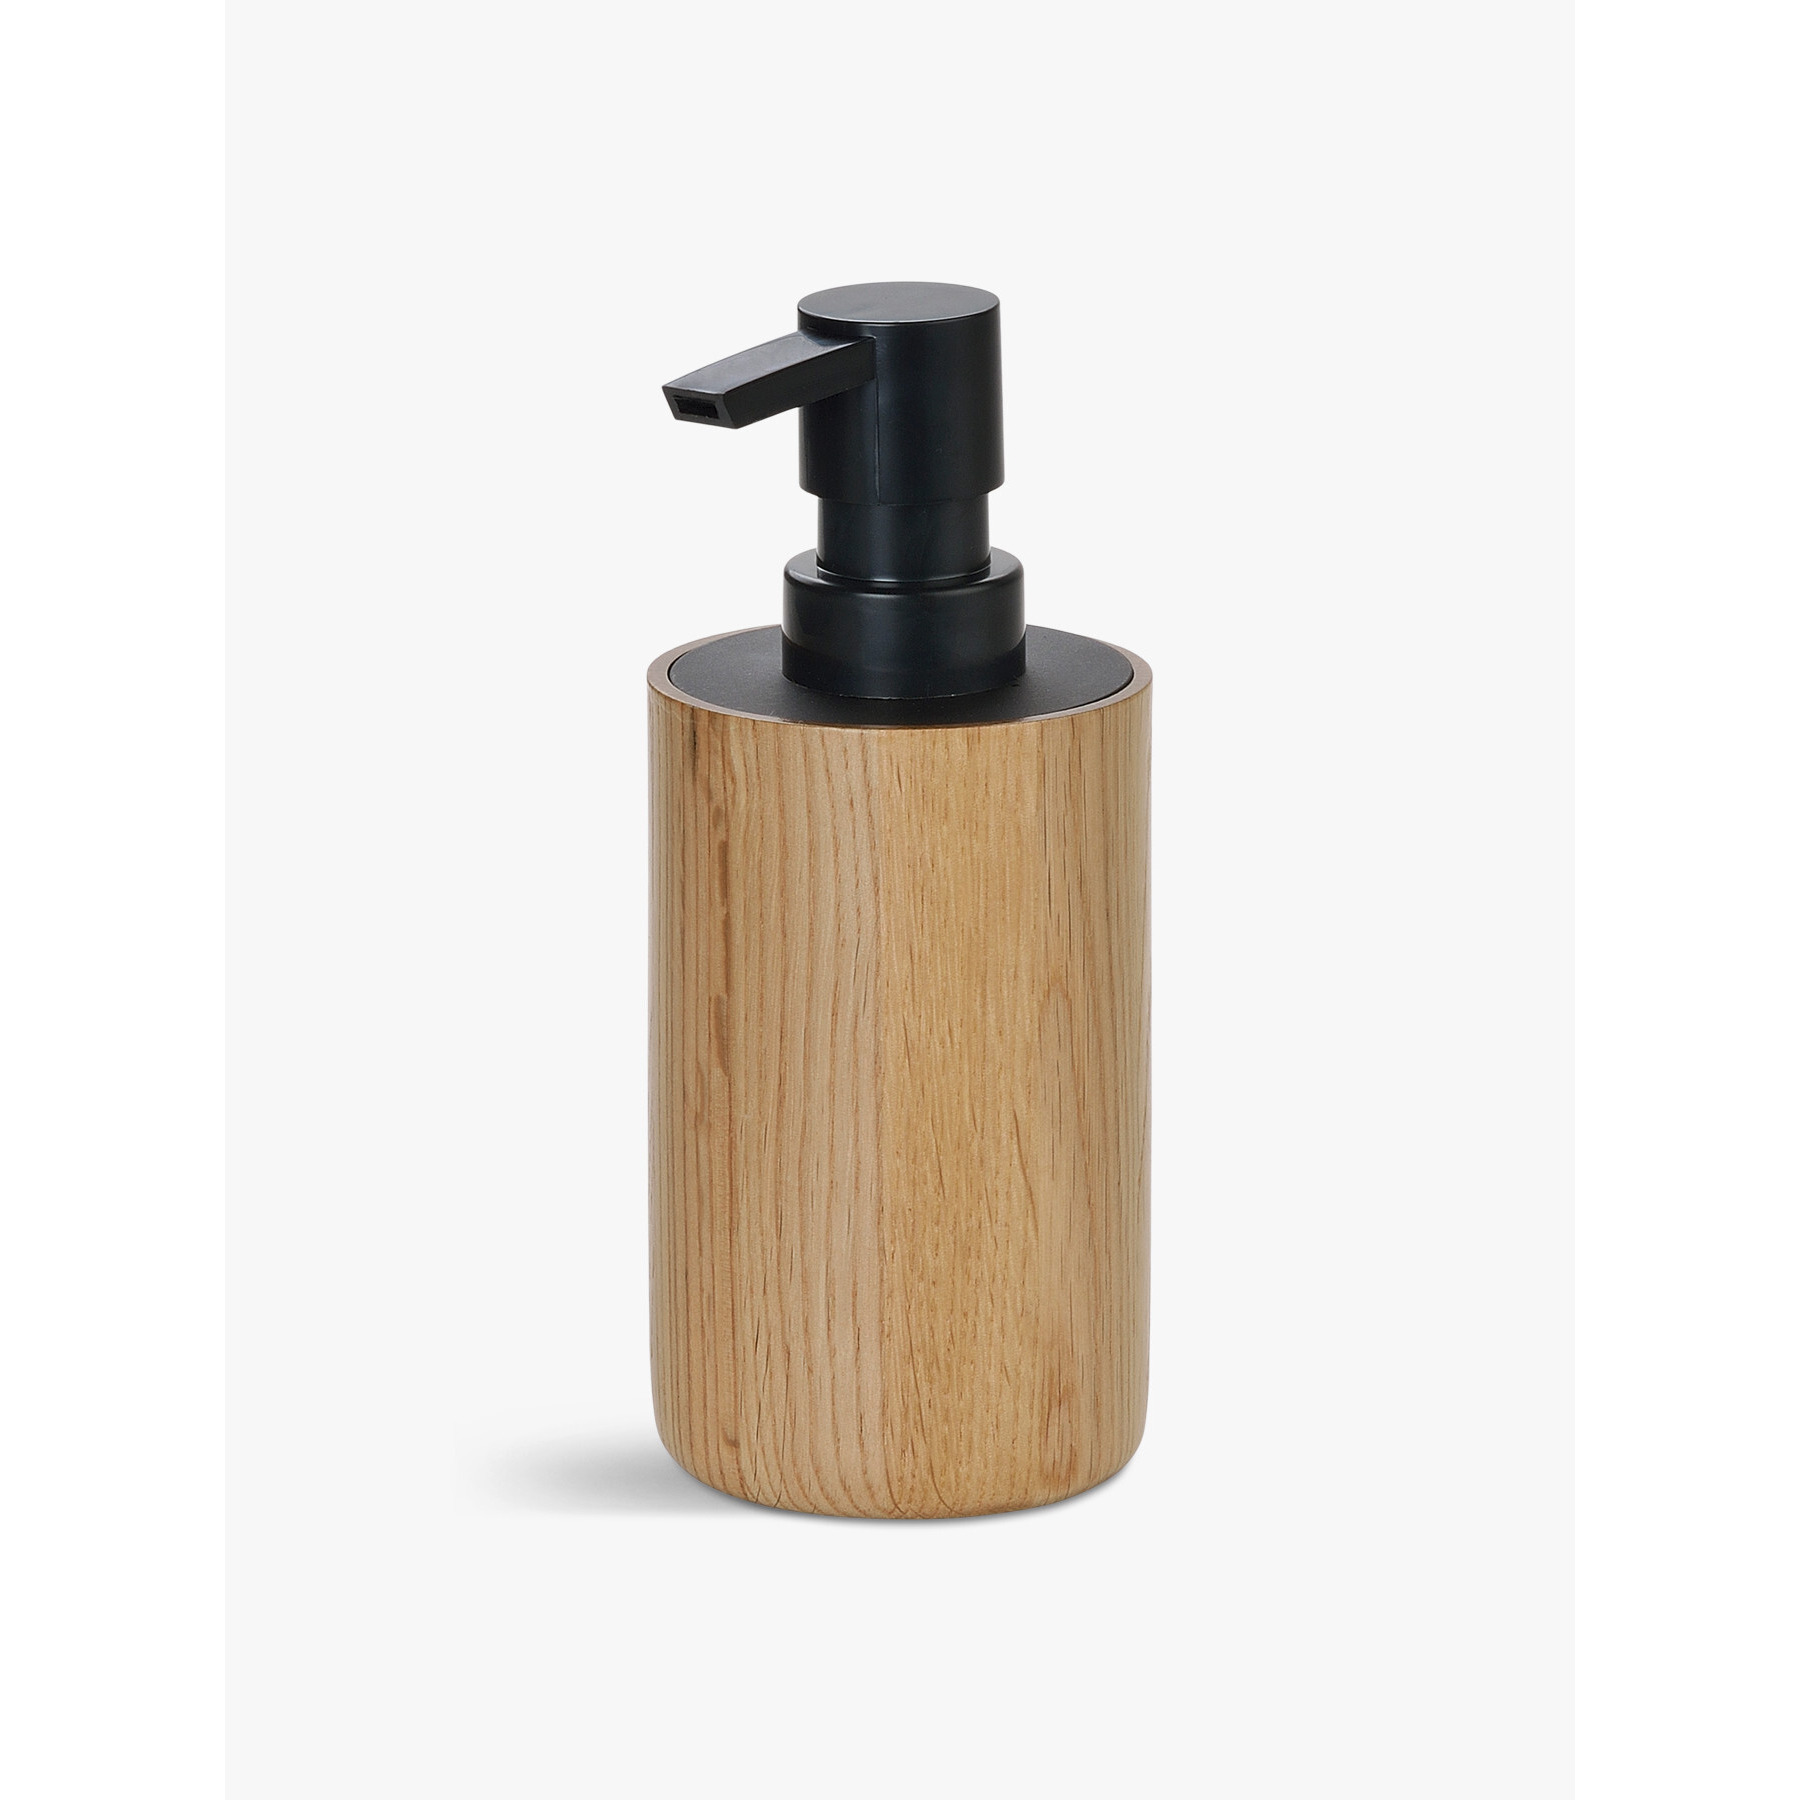 Andrea House Black Oak Soap Dispenser - image 1